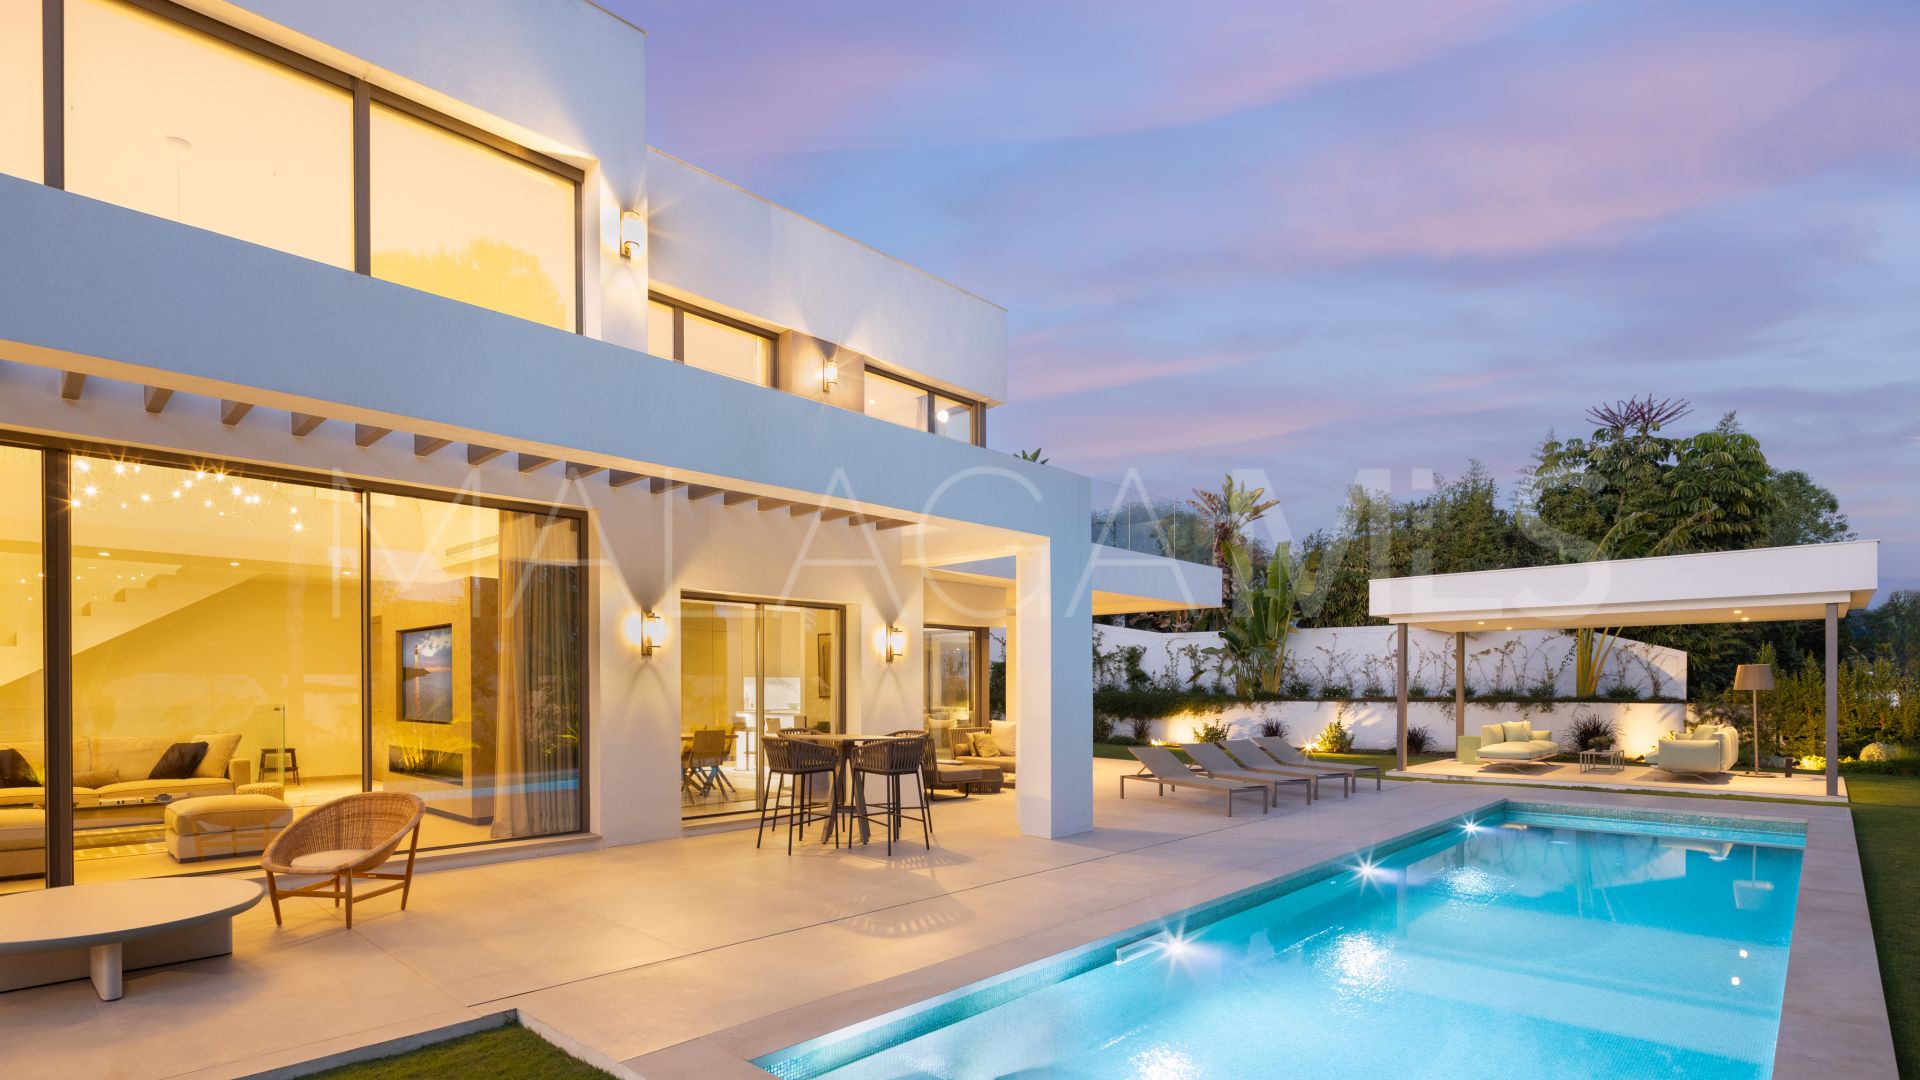 La Carolina 5 bedrooms villa for sale